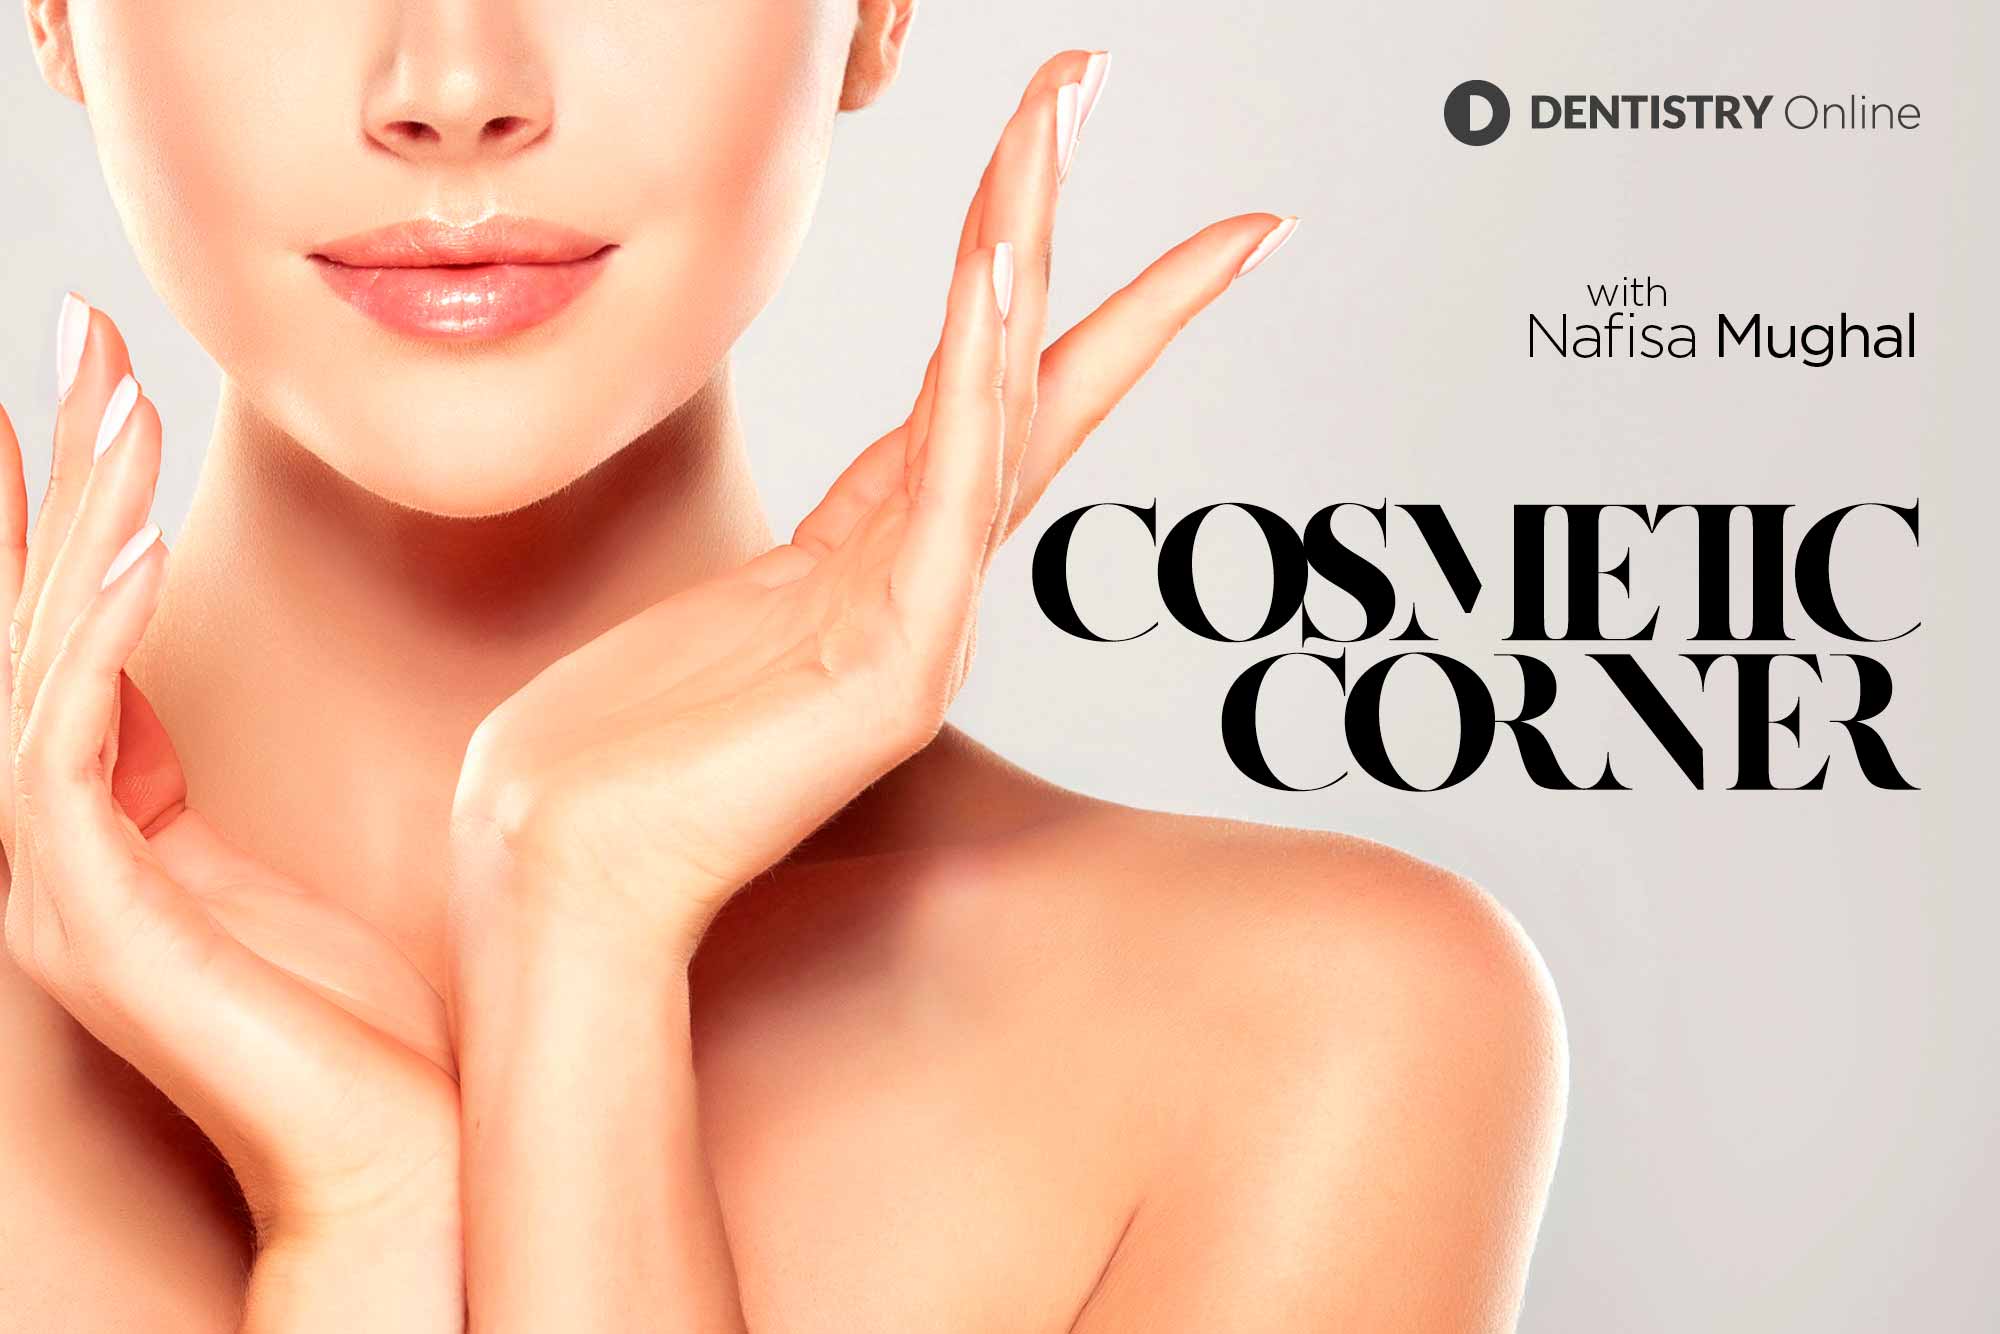 Cosmetic corner – facial aesthetics